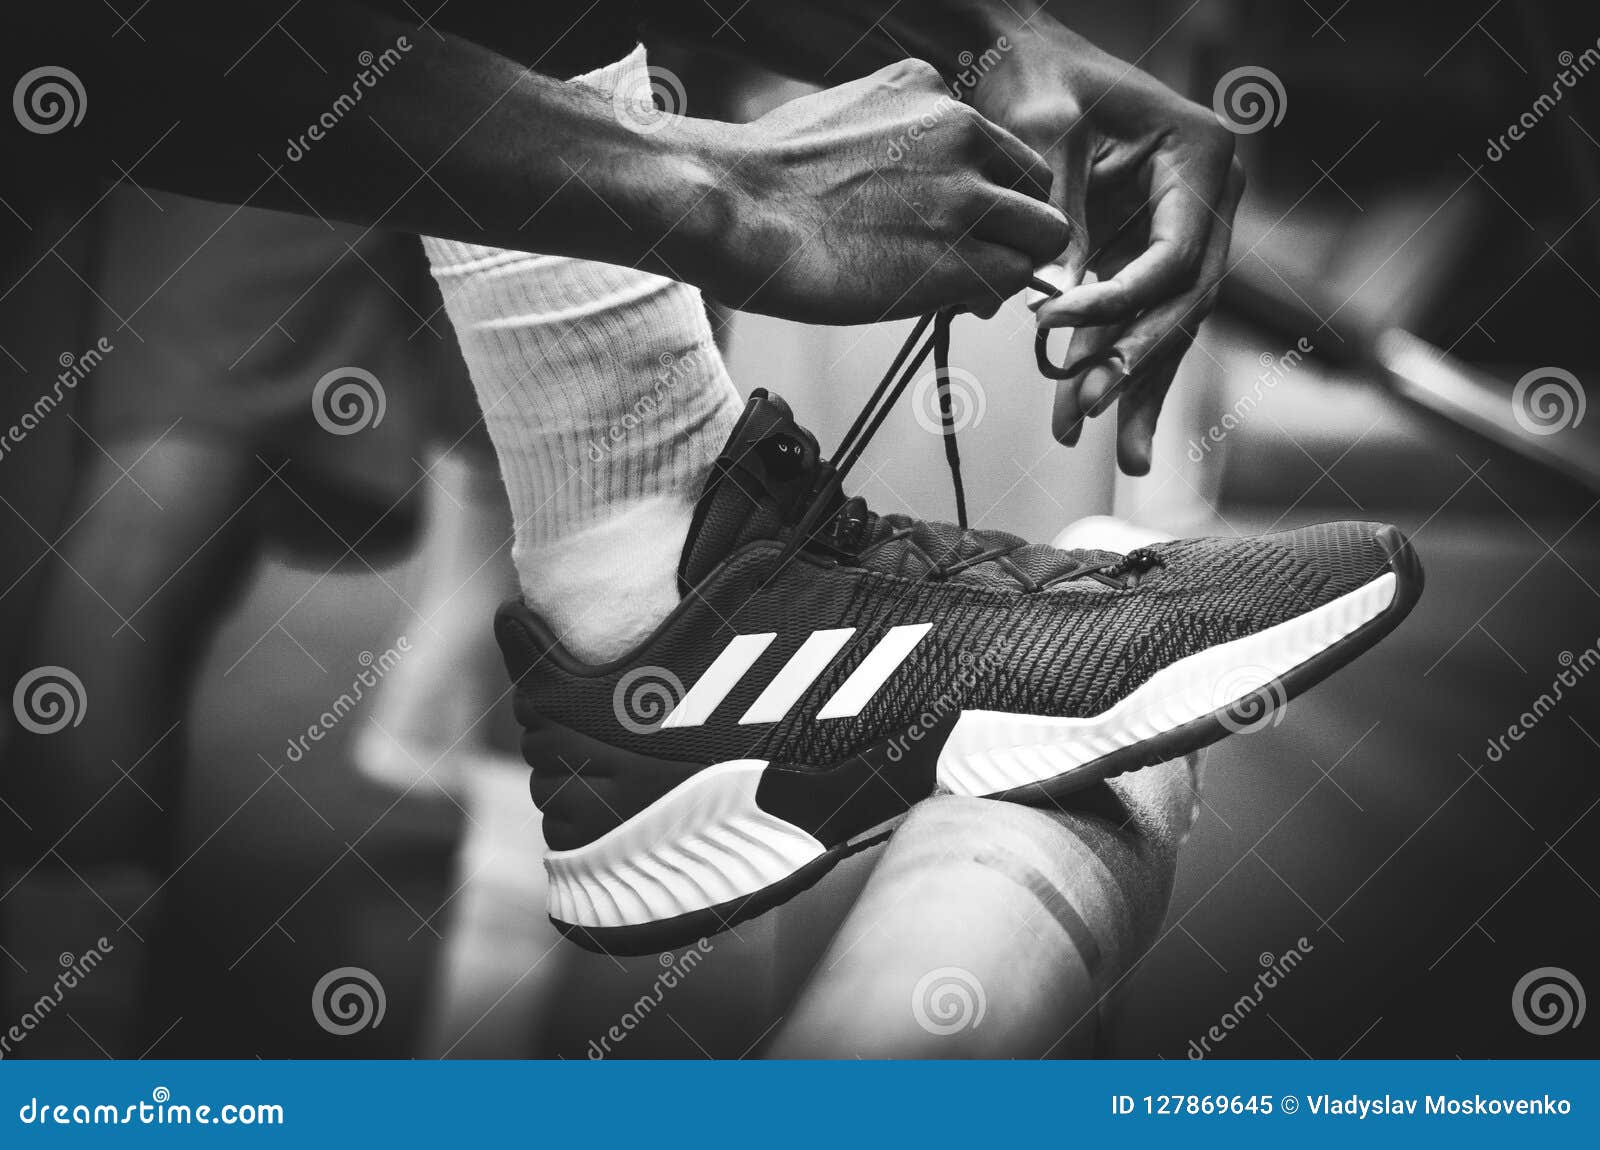 tying adidas shoes